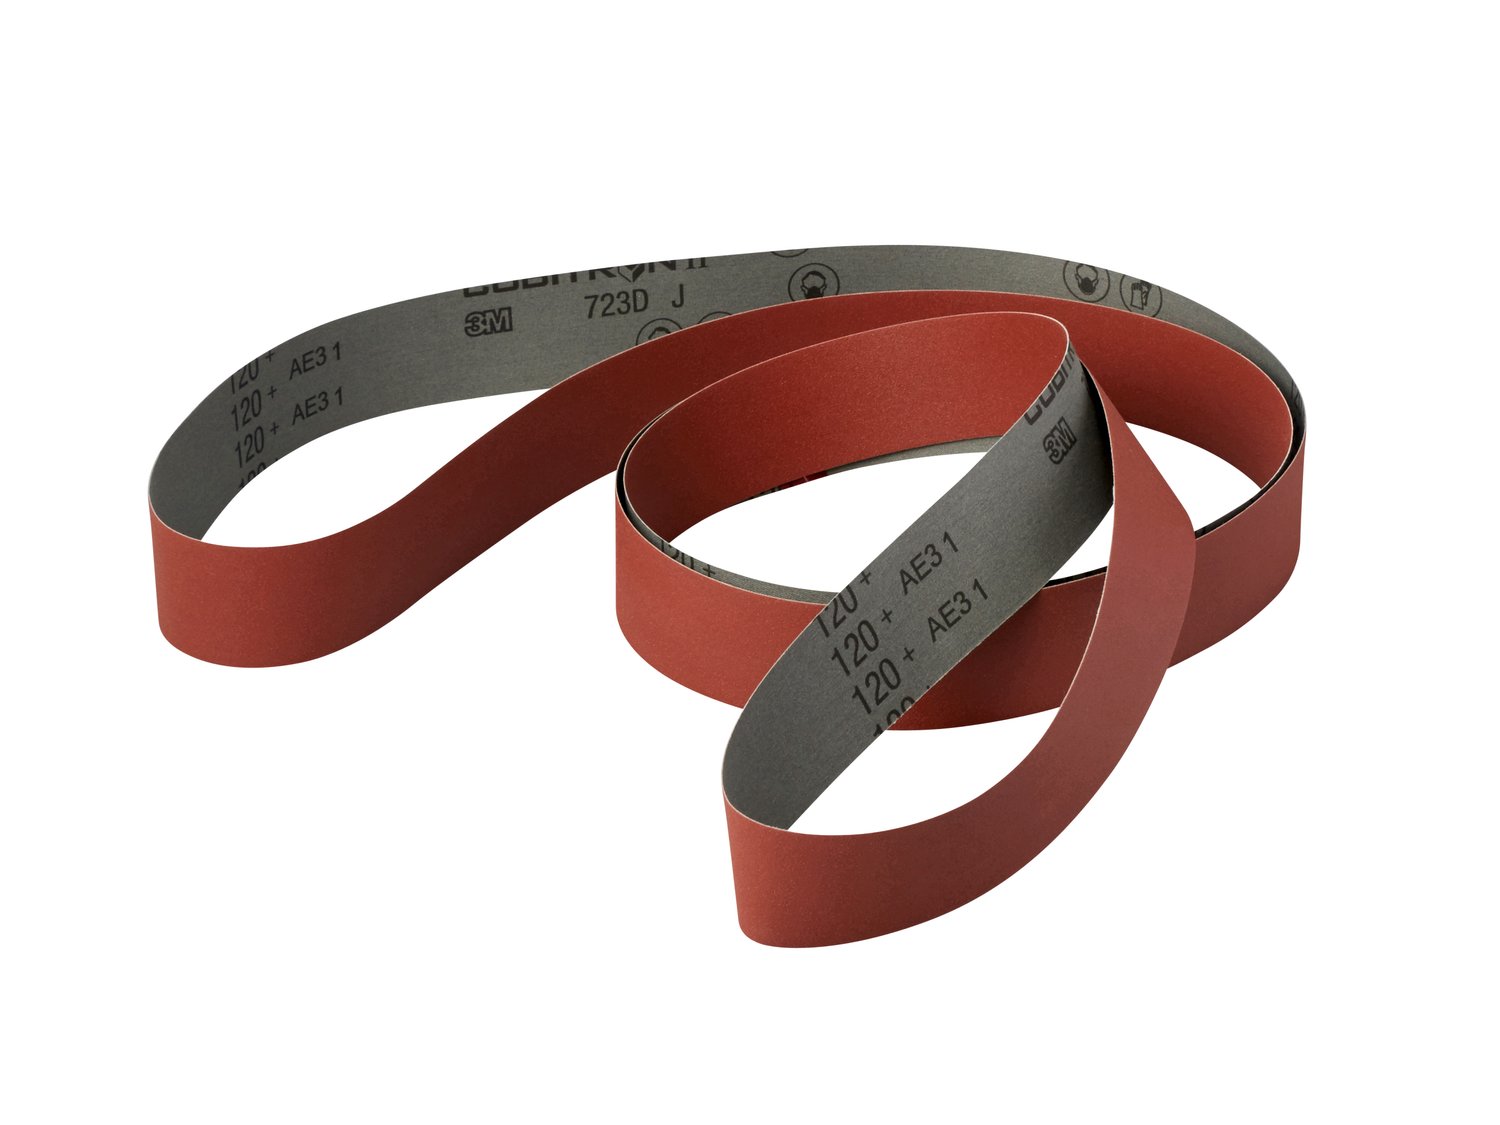 7010512241 - 3M Cubitron ll Cloth Belt 723D, 180+ J-weight, 2 in x 132 in,
Film-lok, Full-flex